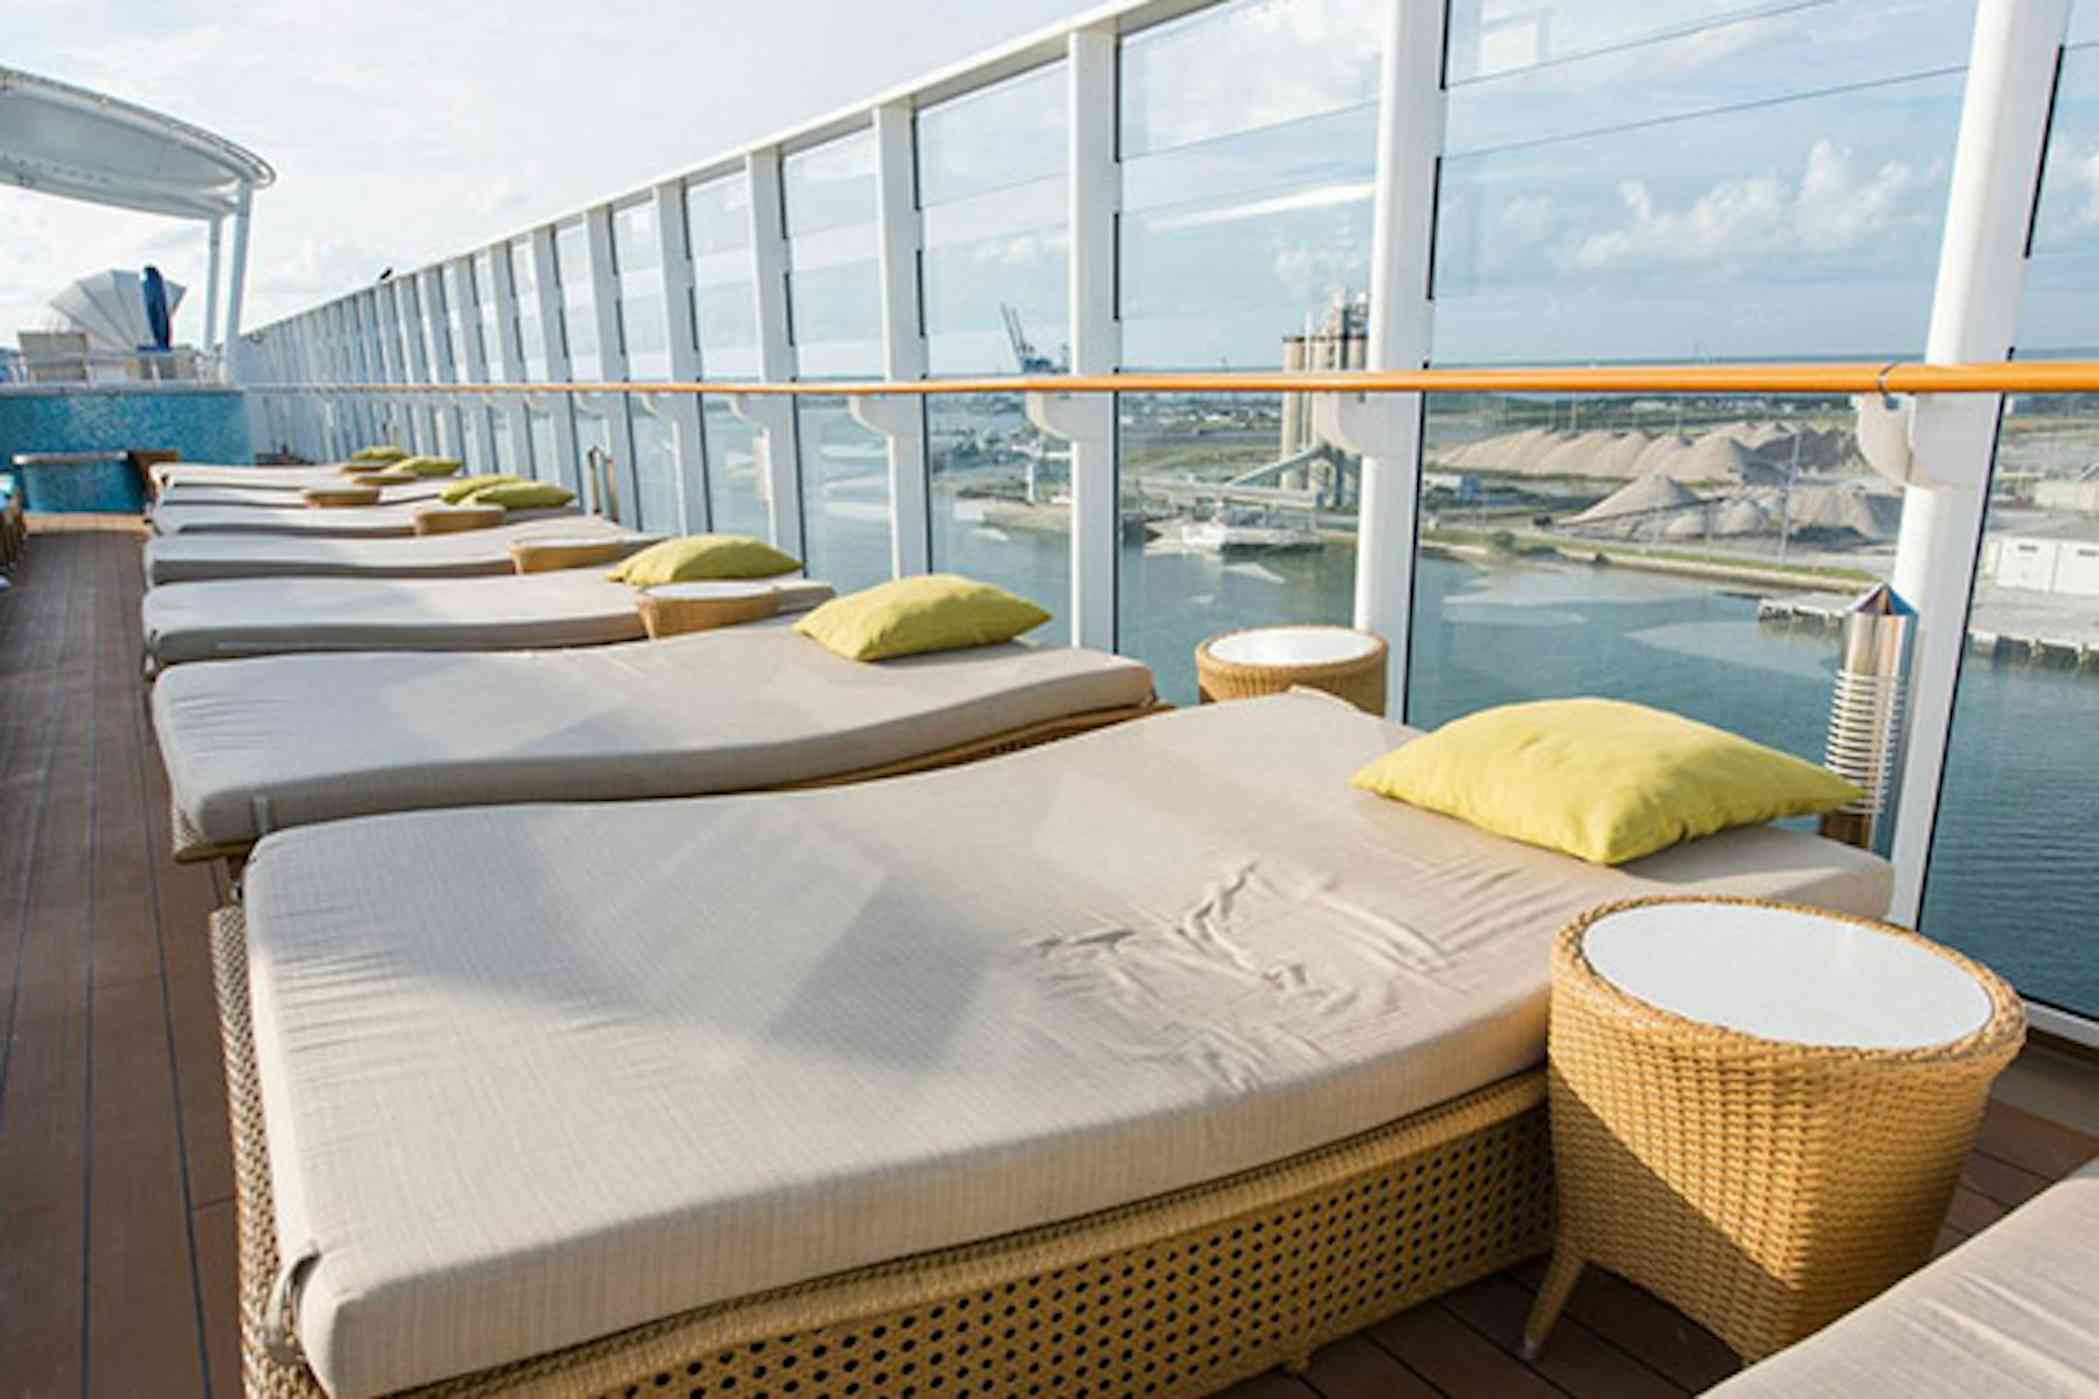 Norwegian Cruise Line Vibe Beach Club Advance Purchase Price